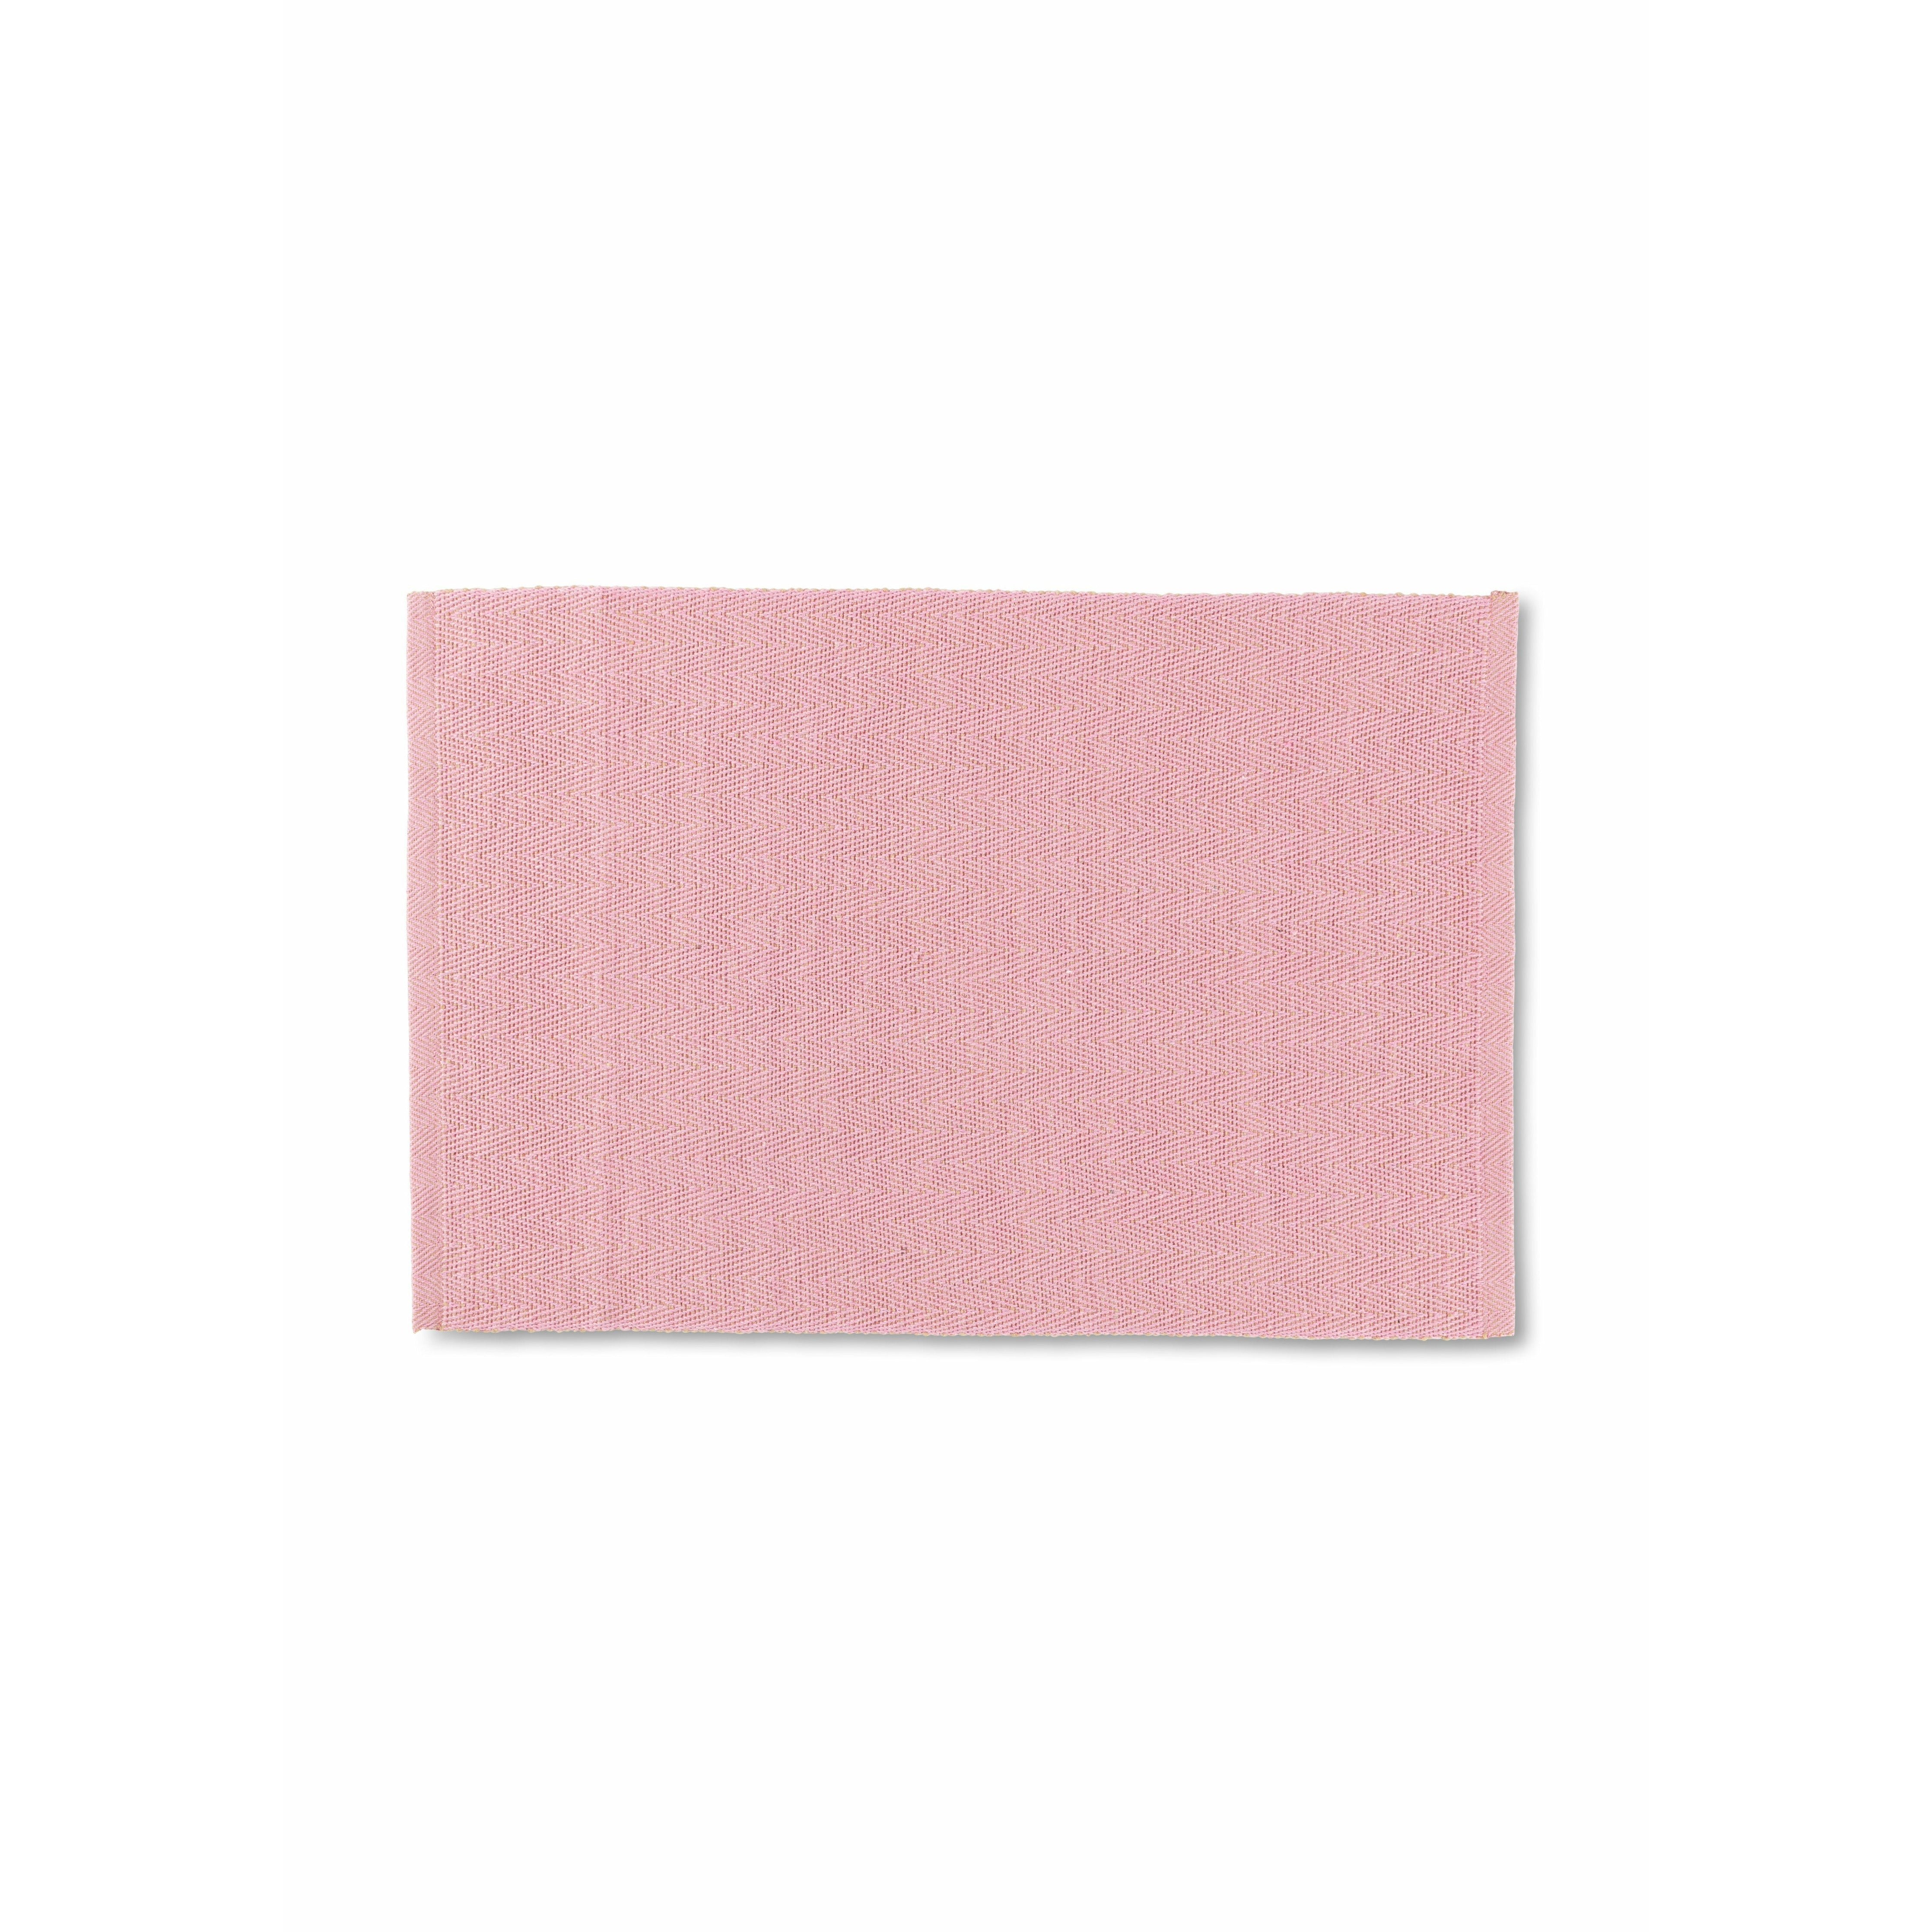 Lyngby Porcelæn Herringband placemat 43x30 cm, roze